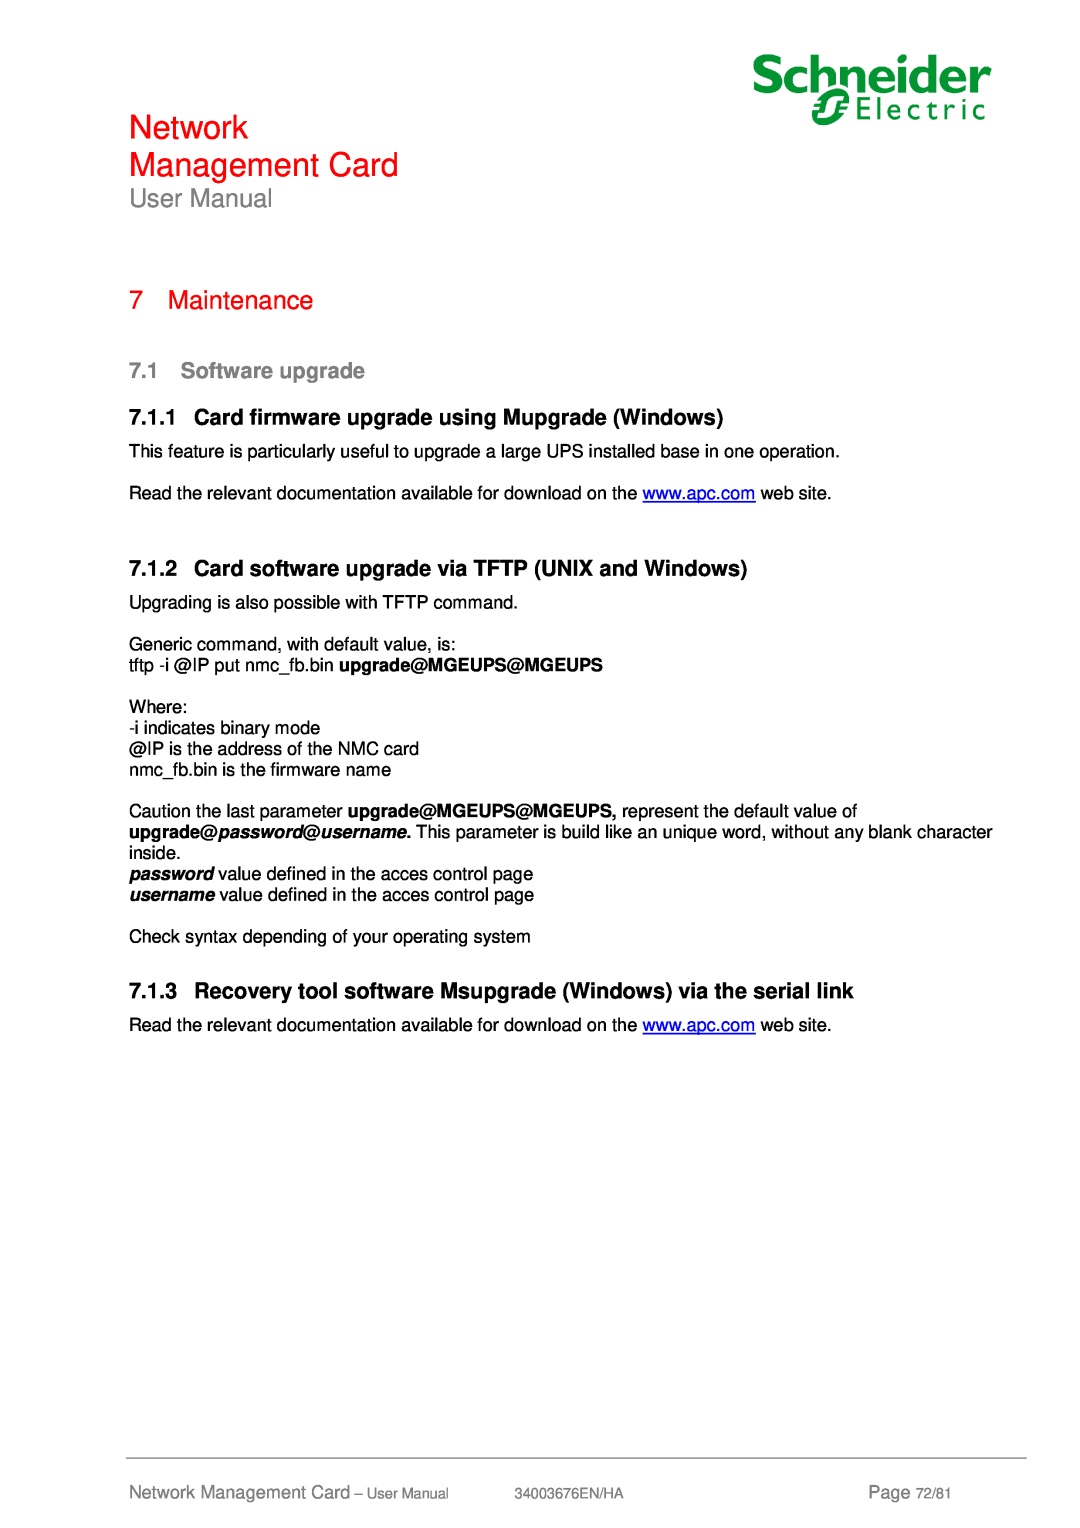 Schneider Electric 66846, 66074 Maintenance, Software upgrade, Card firmware upgrade using Mupgrade Windows, User Manual 